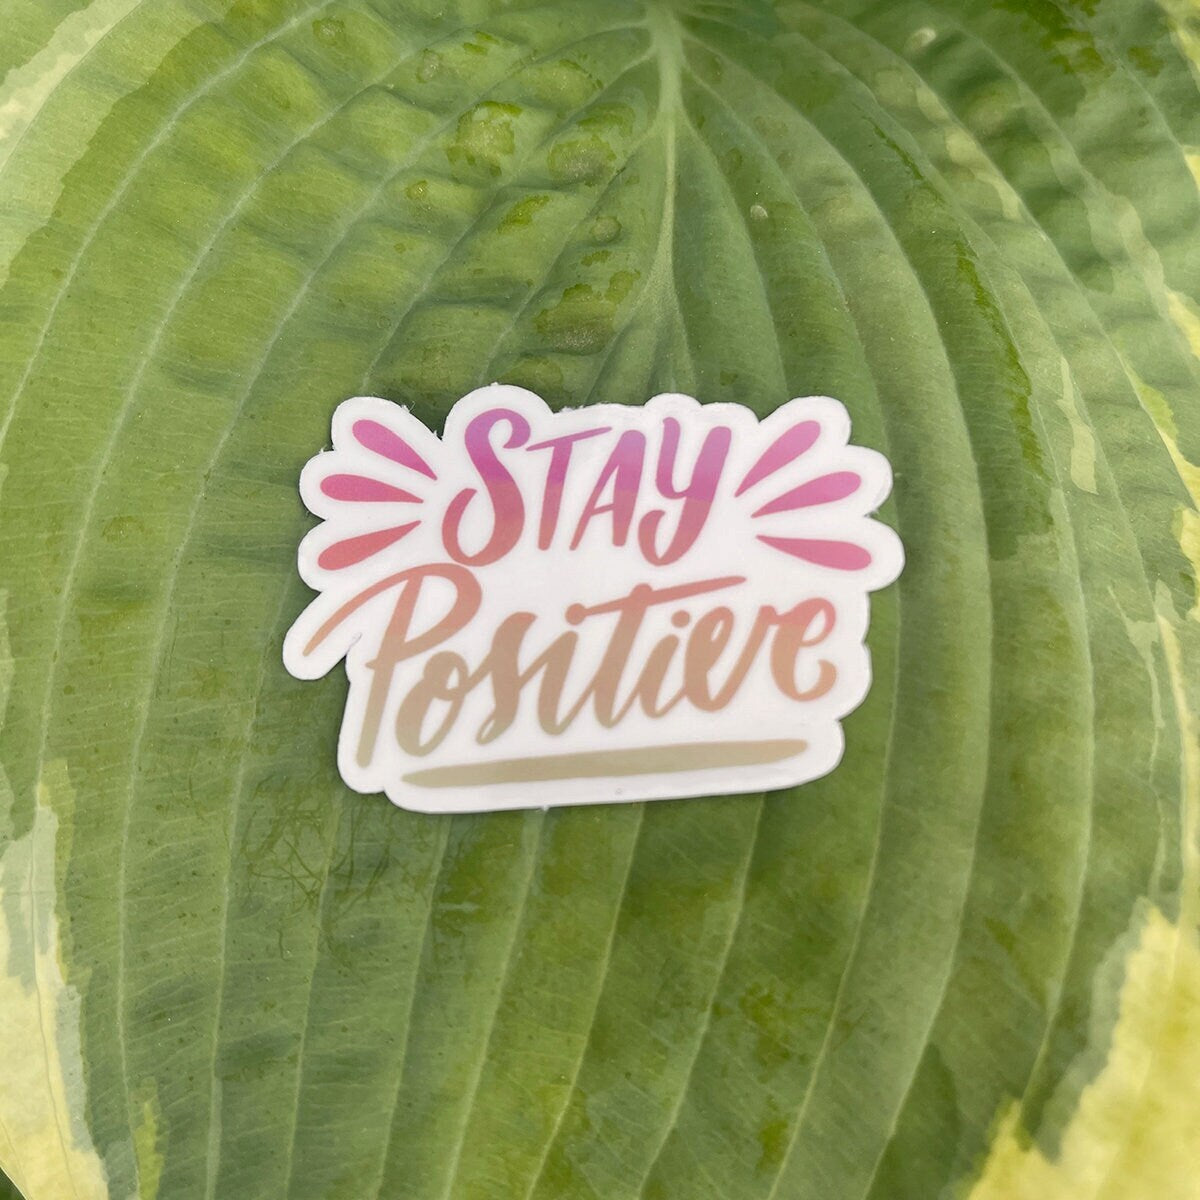 Stay Positive Sticker - Waterproof  | Positive Sticker | Motivational Sticker